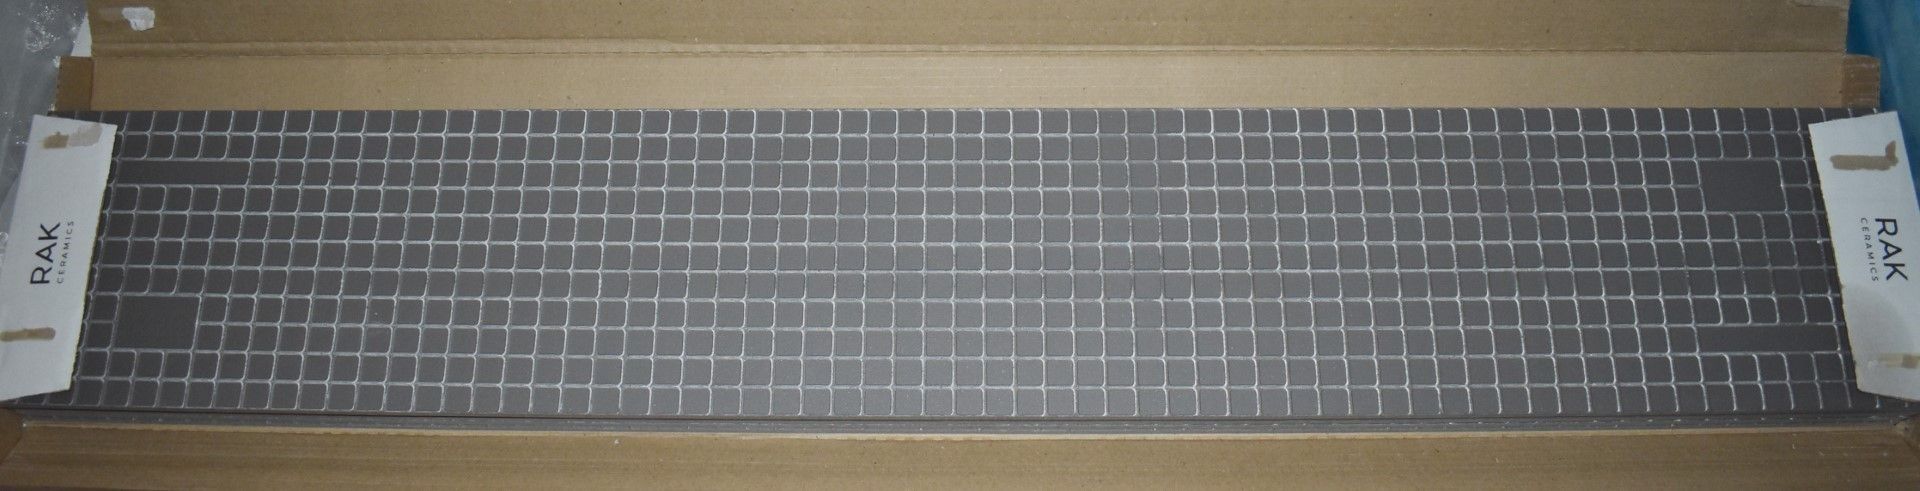 7 x Boxes of RAK Porcelain Floor or Wall Tiles - M Project Wood Design in Dark Grey - 19.5 x 120 cm - Image 3 of 11